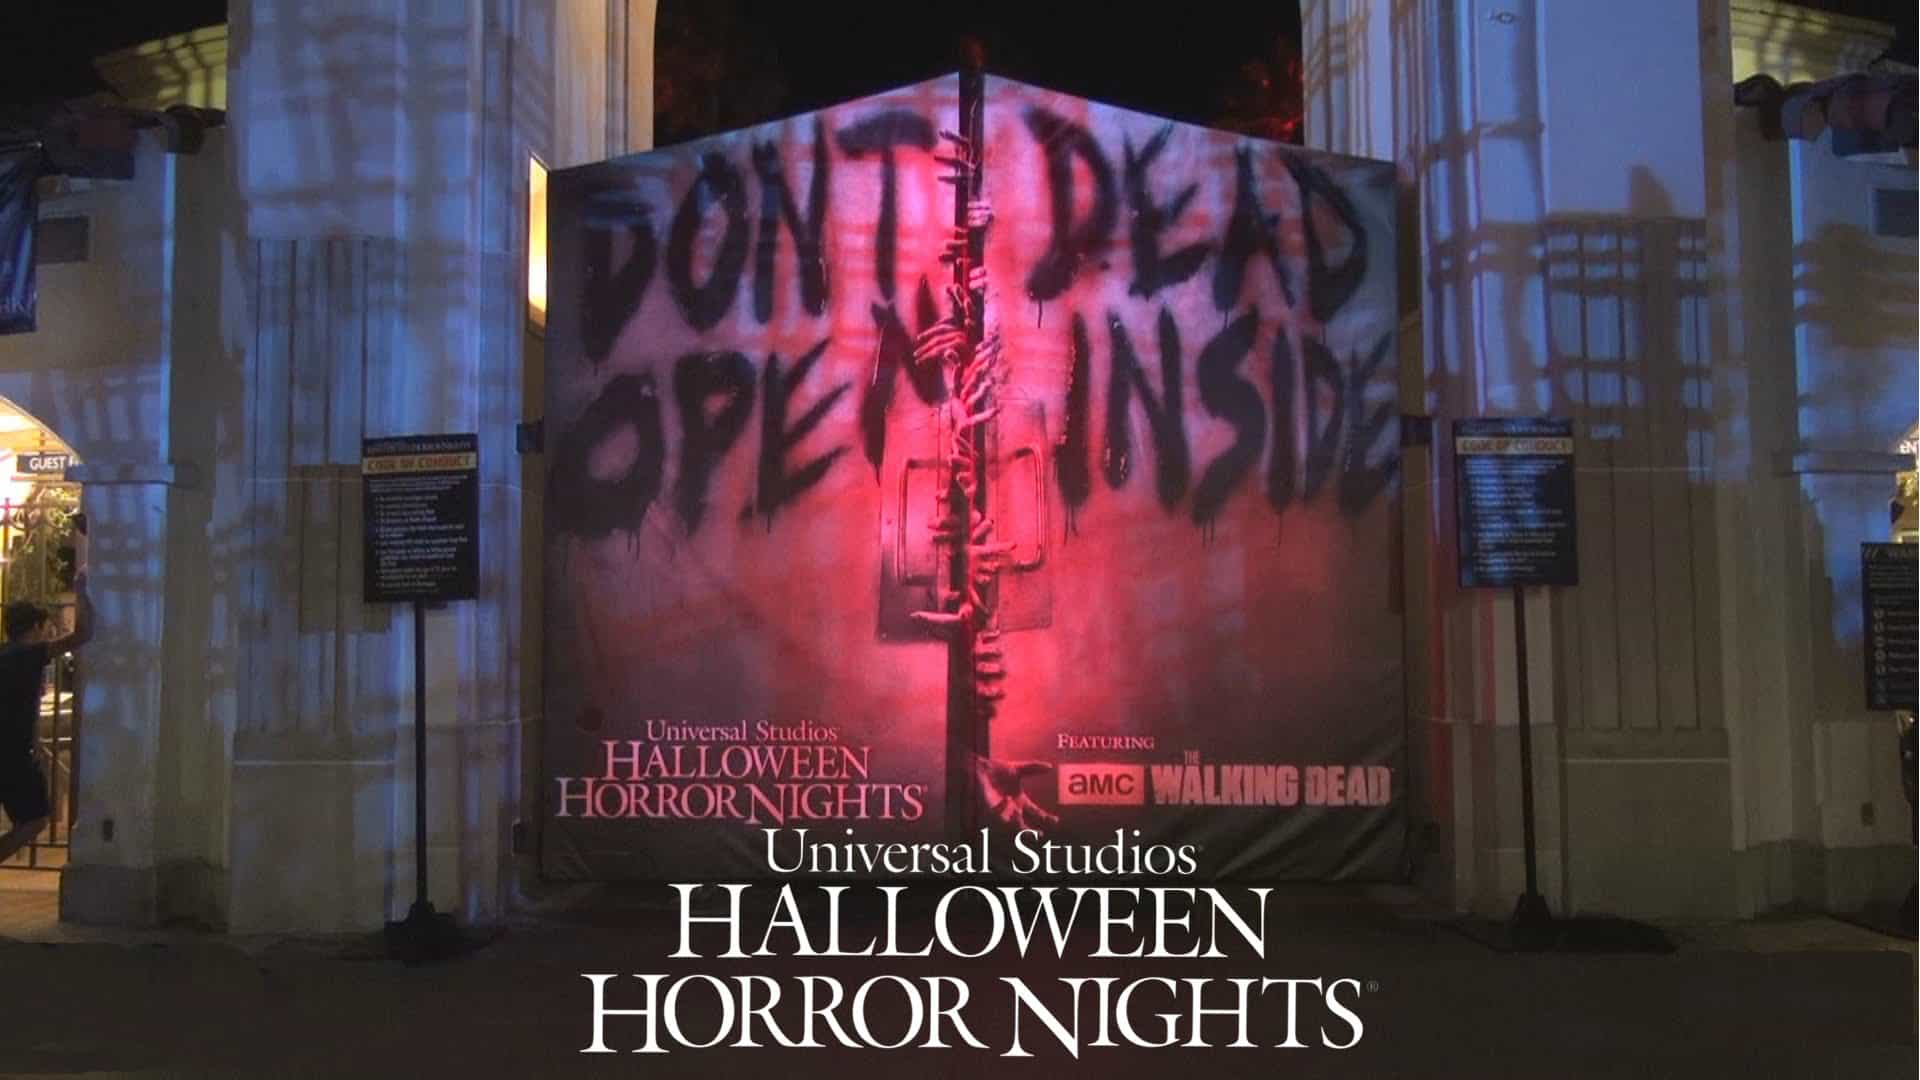 Universal Studios Halloween Horror Nights Haunting